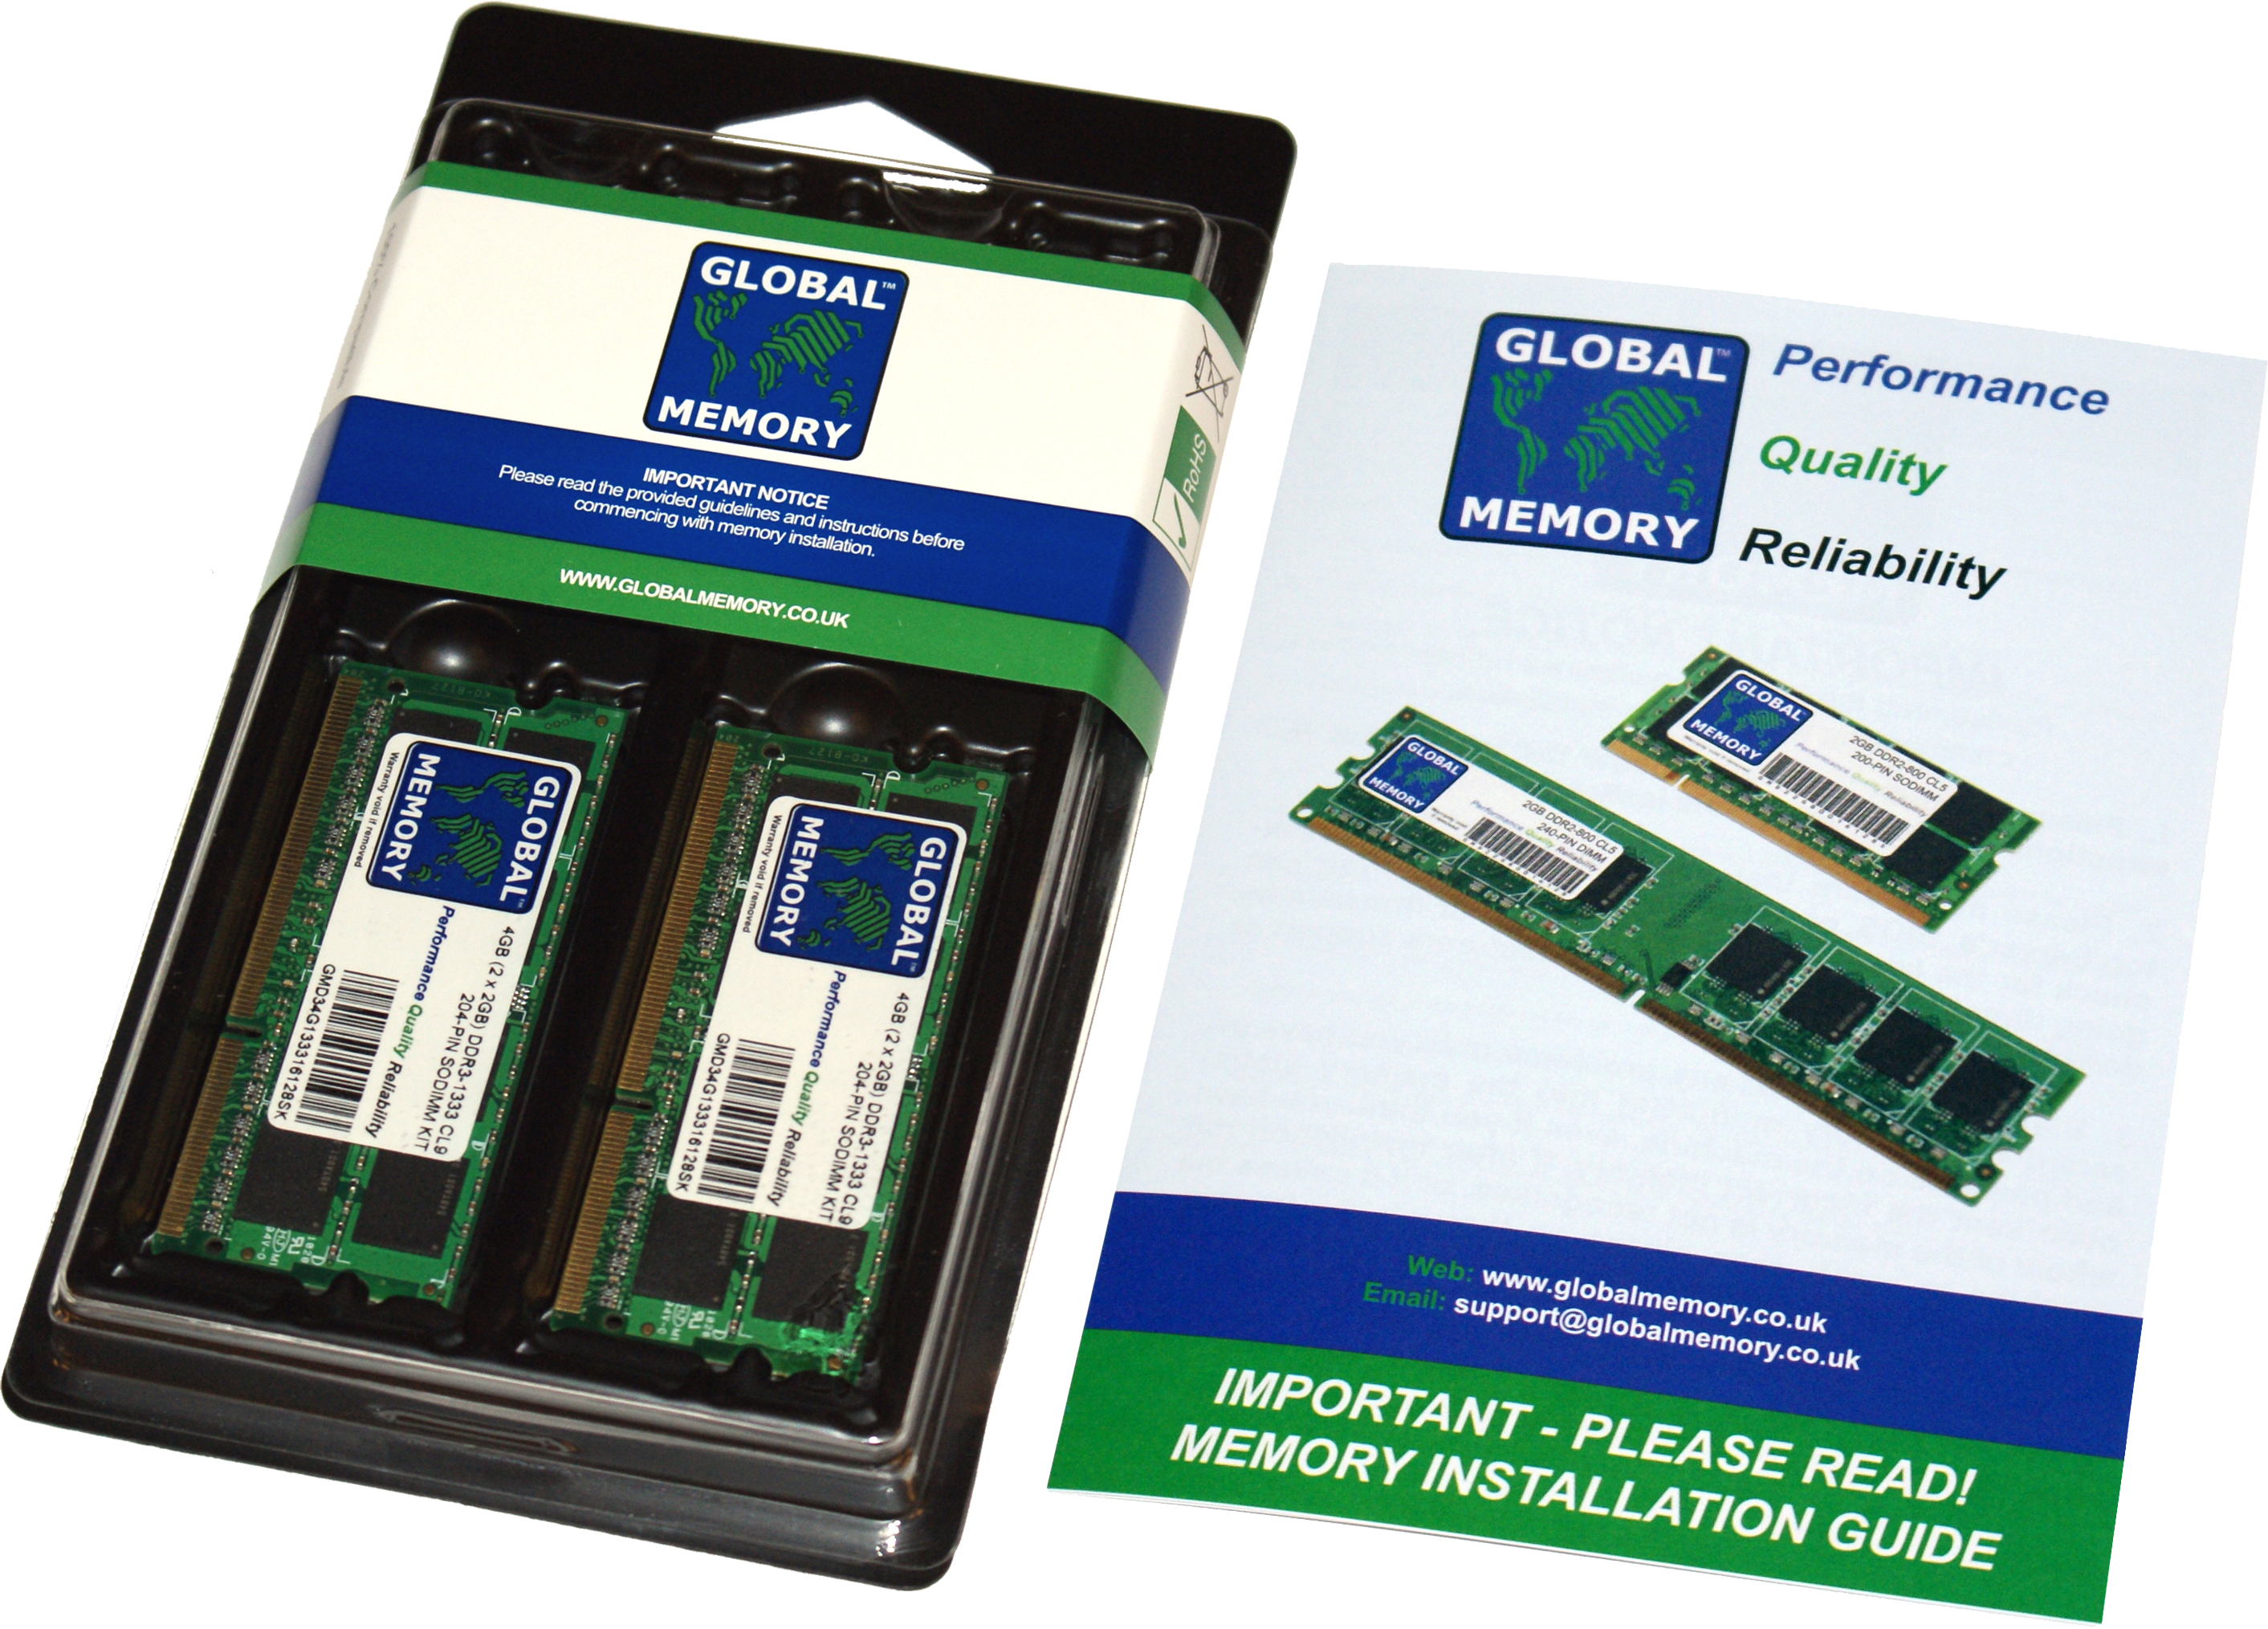 8GB (2 x 4GB) DDR3 1866MHz PC3-14900 204-PIN SODIMM MEMORY RAM KIT FOR ACER LAPTOPS/NOTEBOOKS